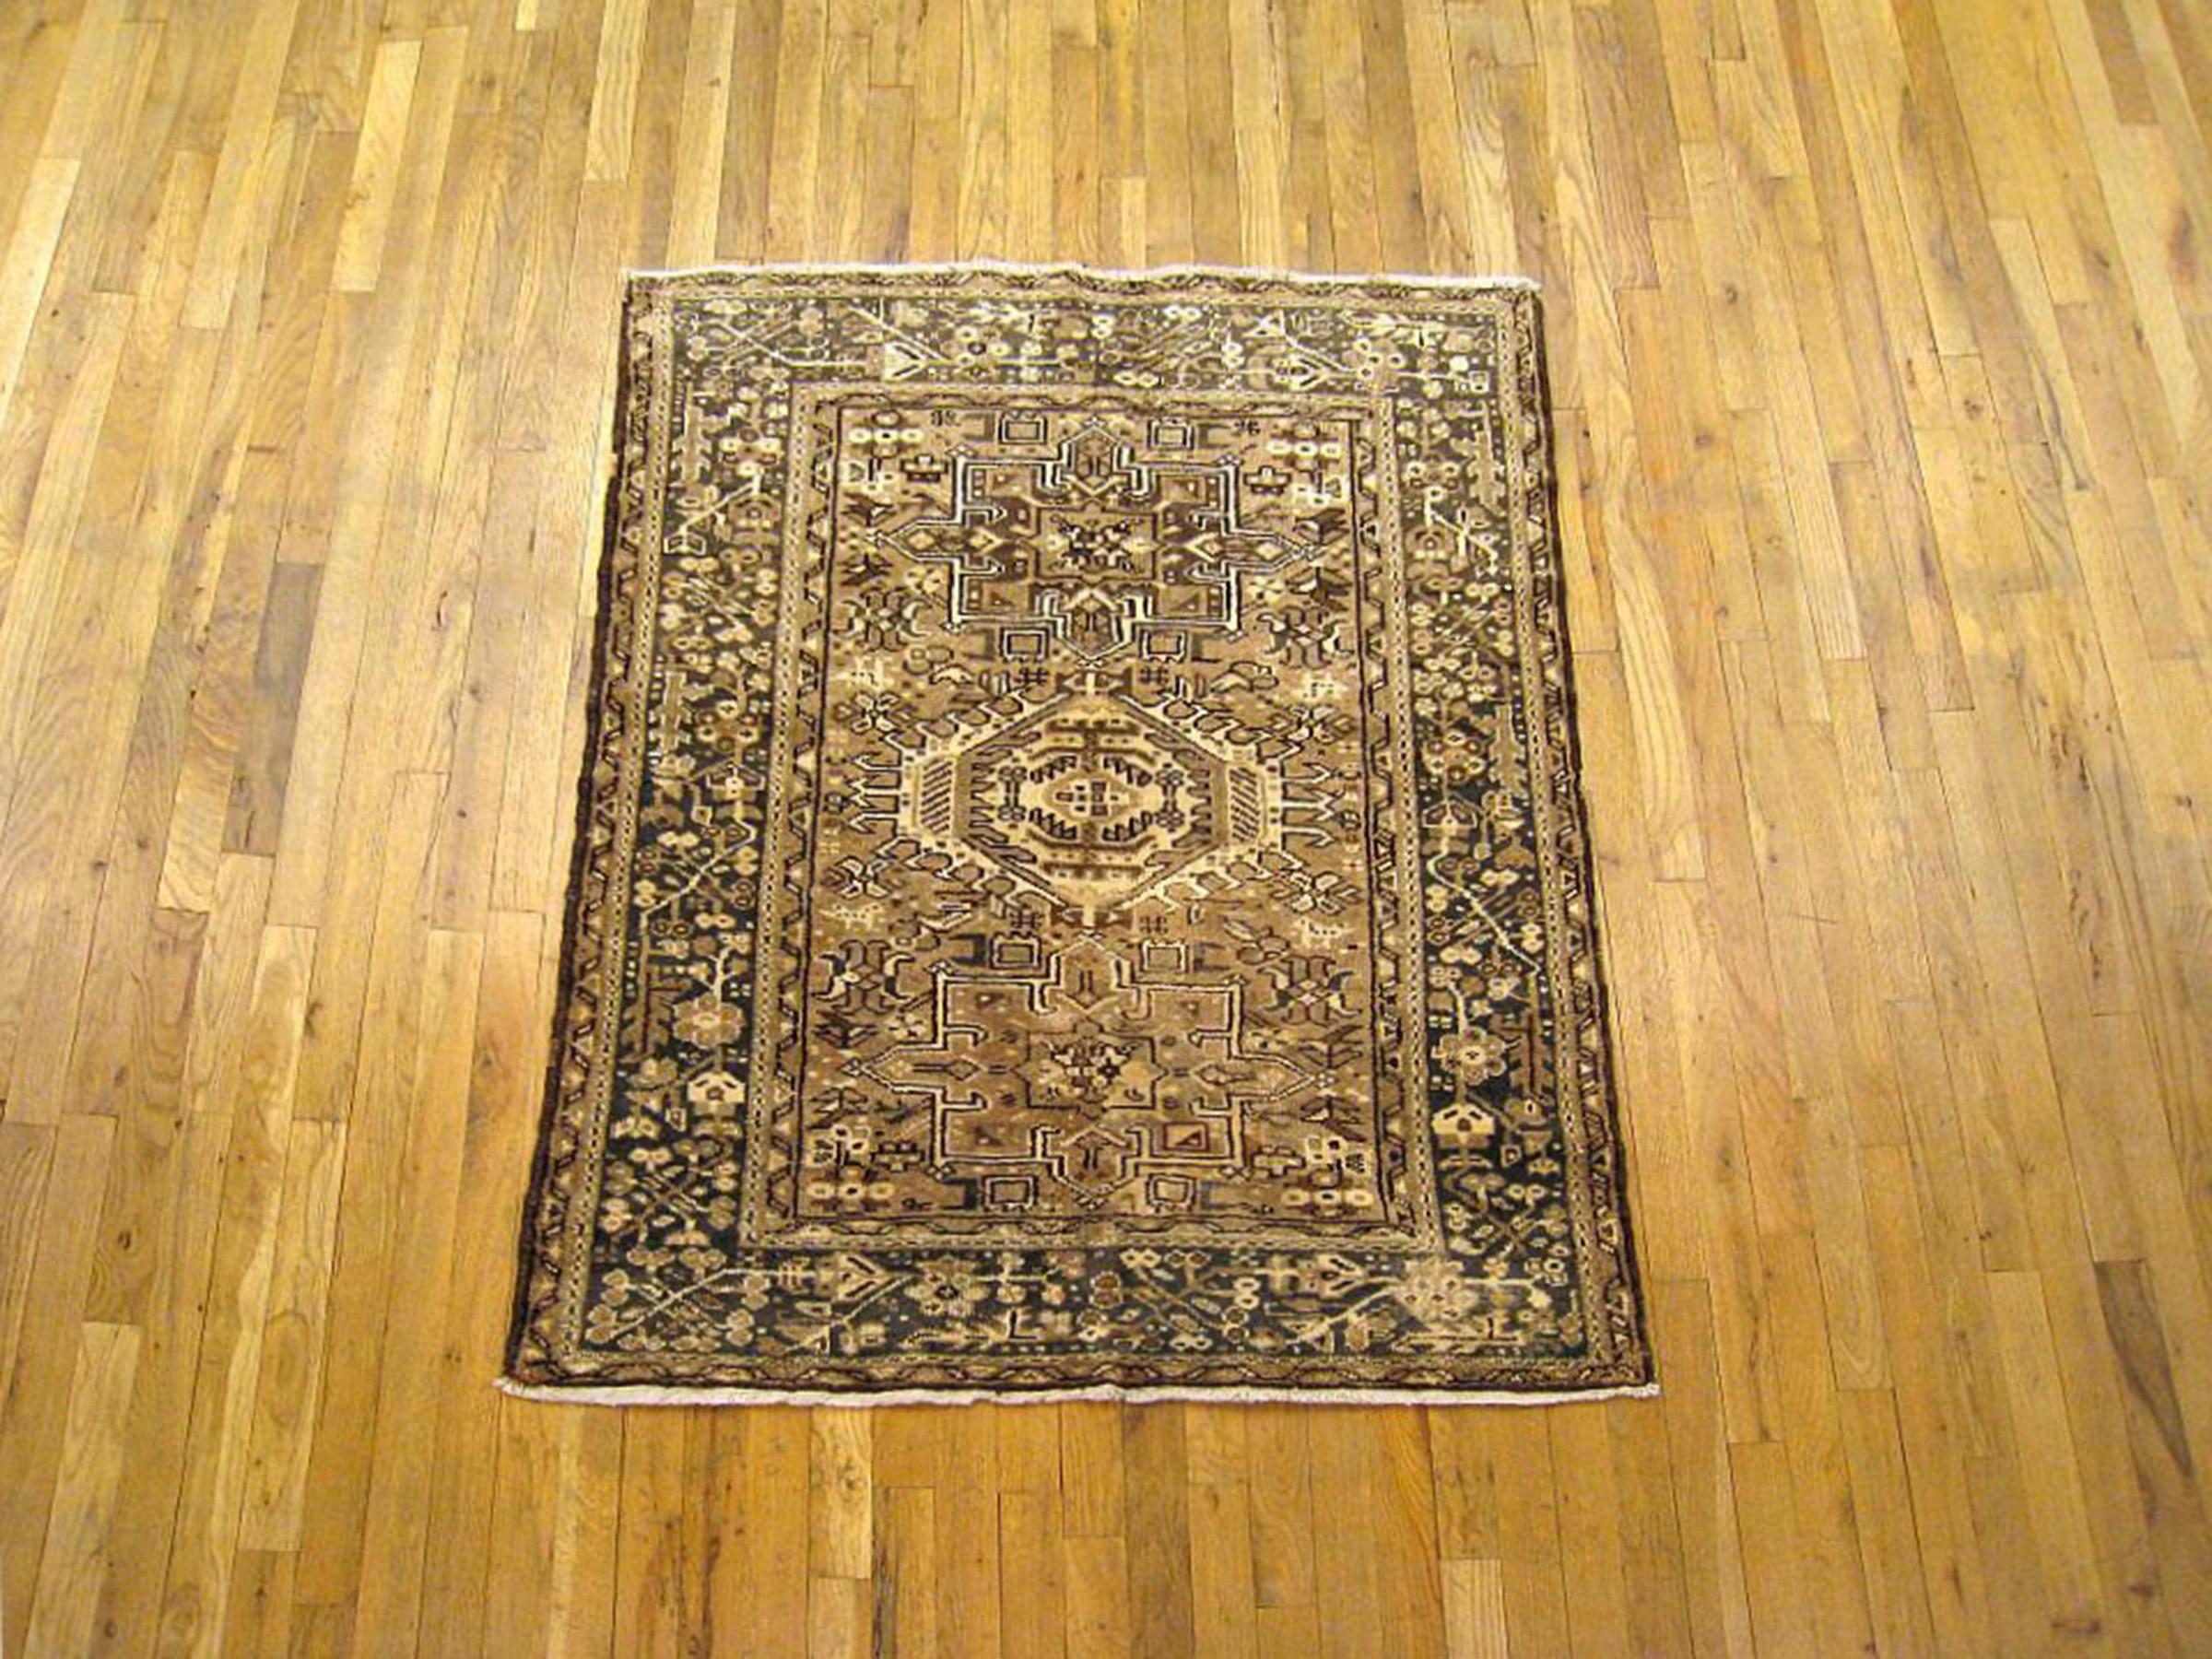 Vintage Persian Heriz Oriental rug, Small size

A vintage Persian Heriz oriental rug, size 4'5